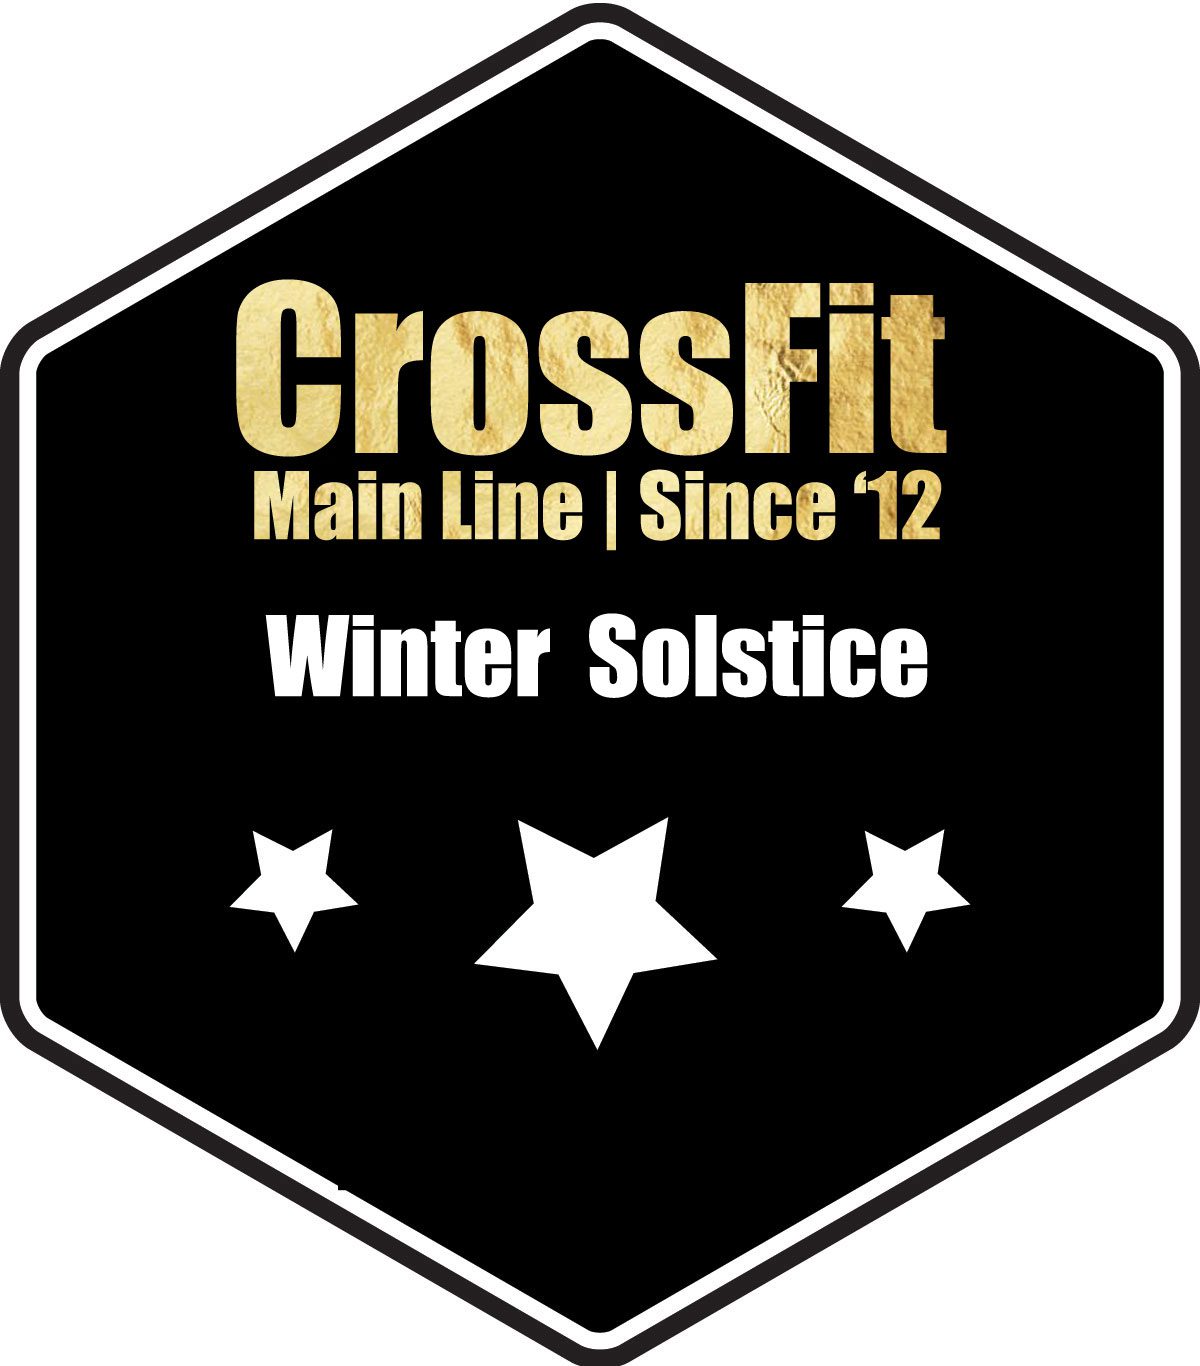 Wednesday 6.26.19 CrossFit